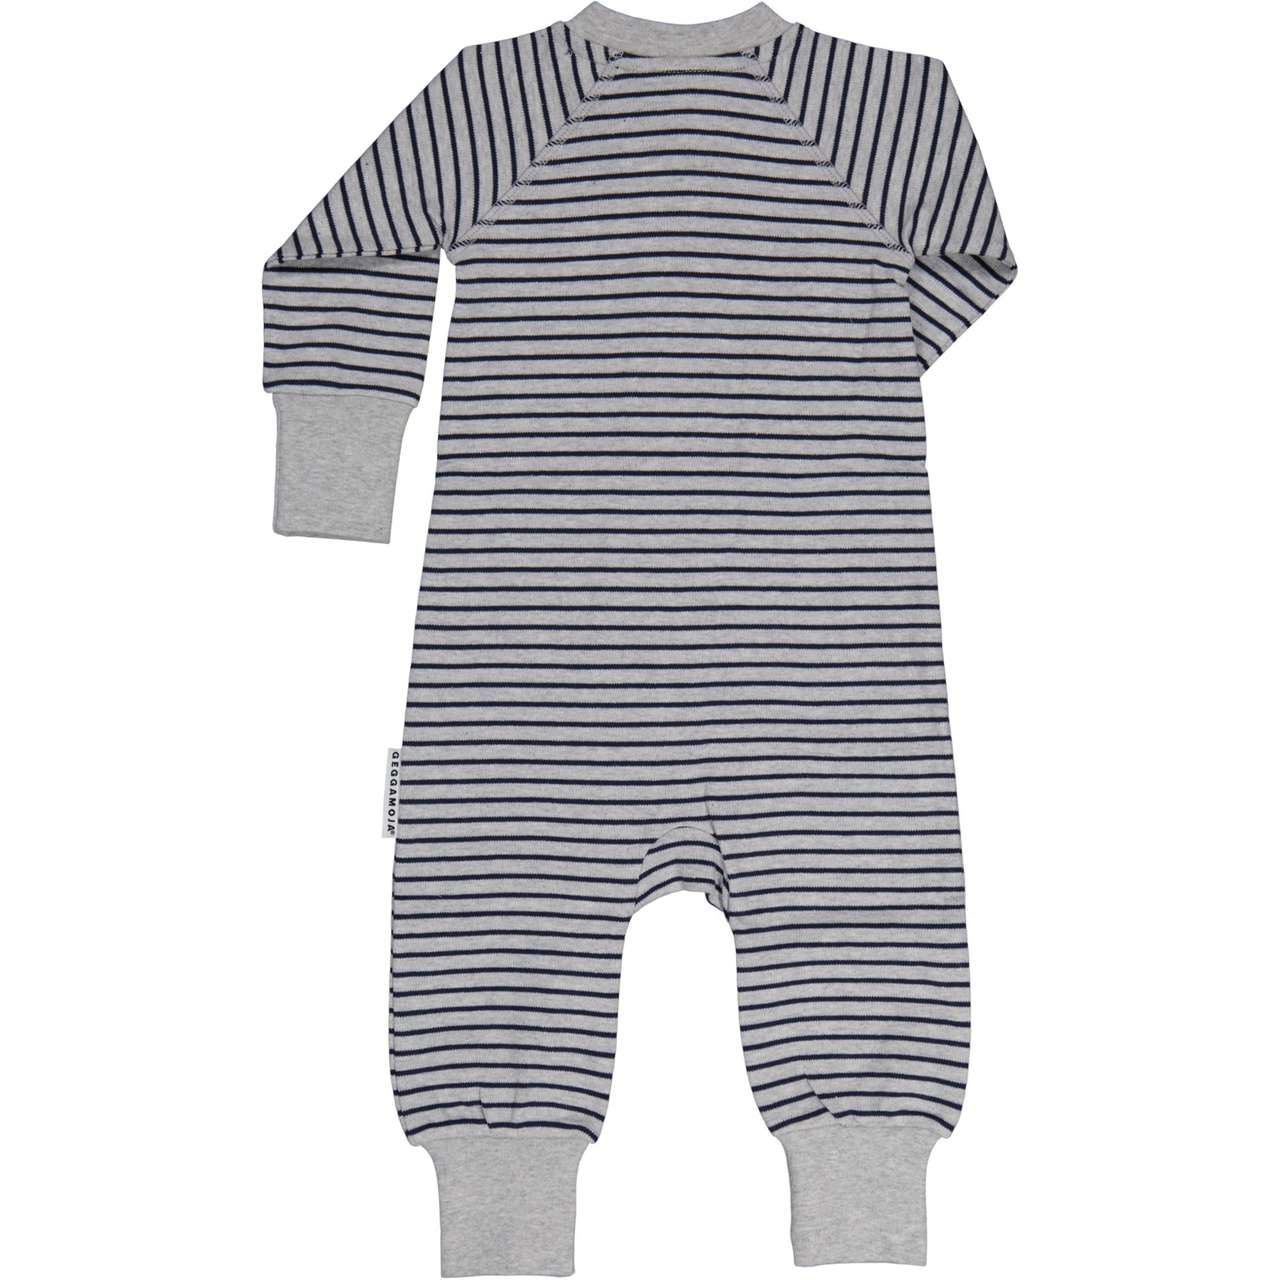 Pyjamas Two way zipper Grey mel/navy 110/116